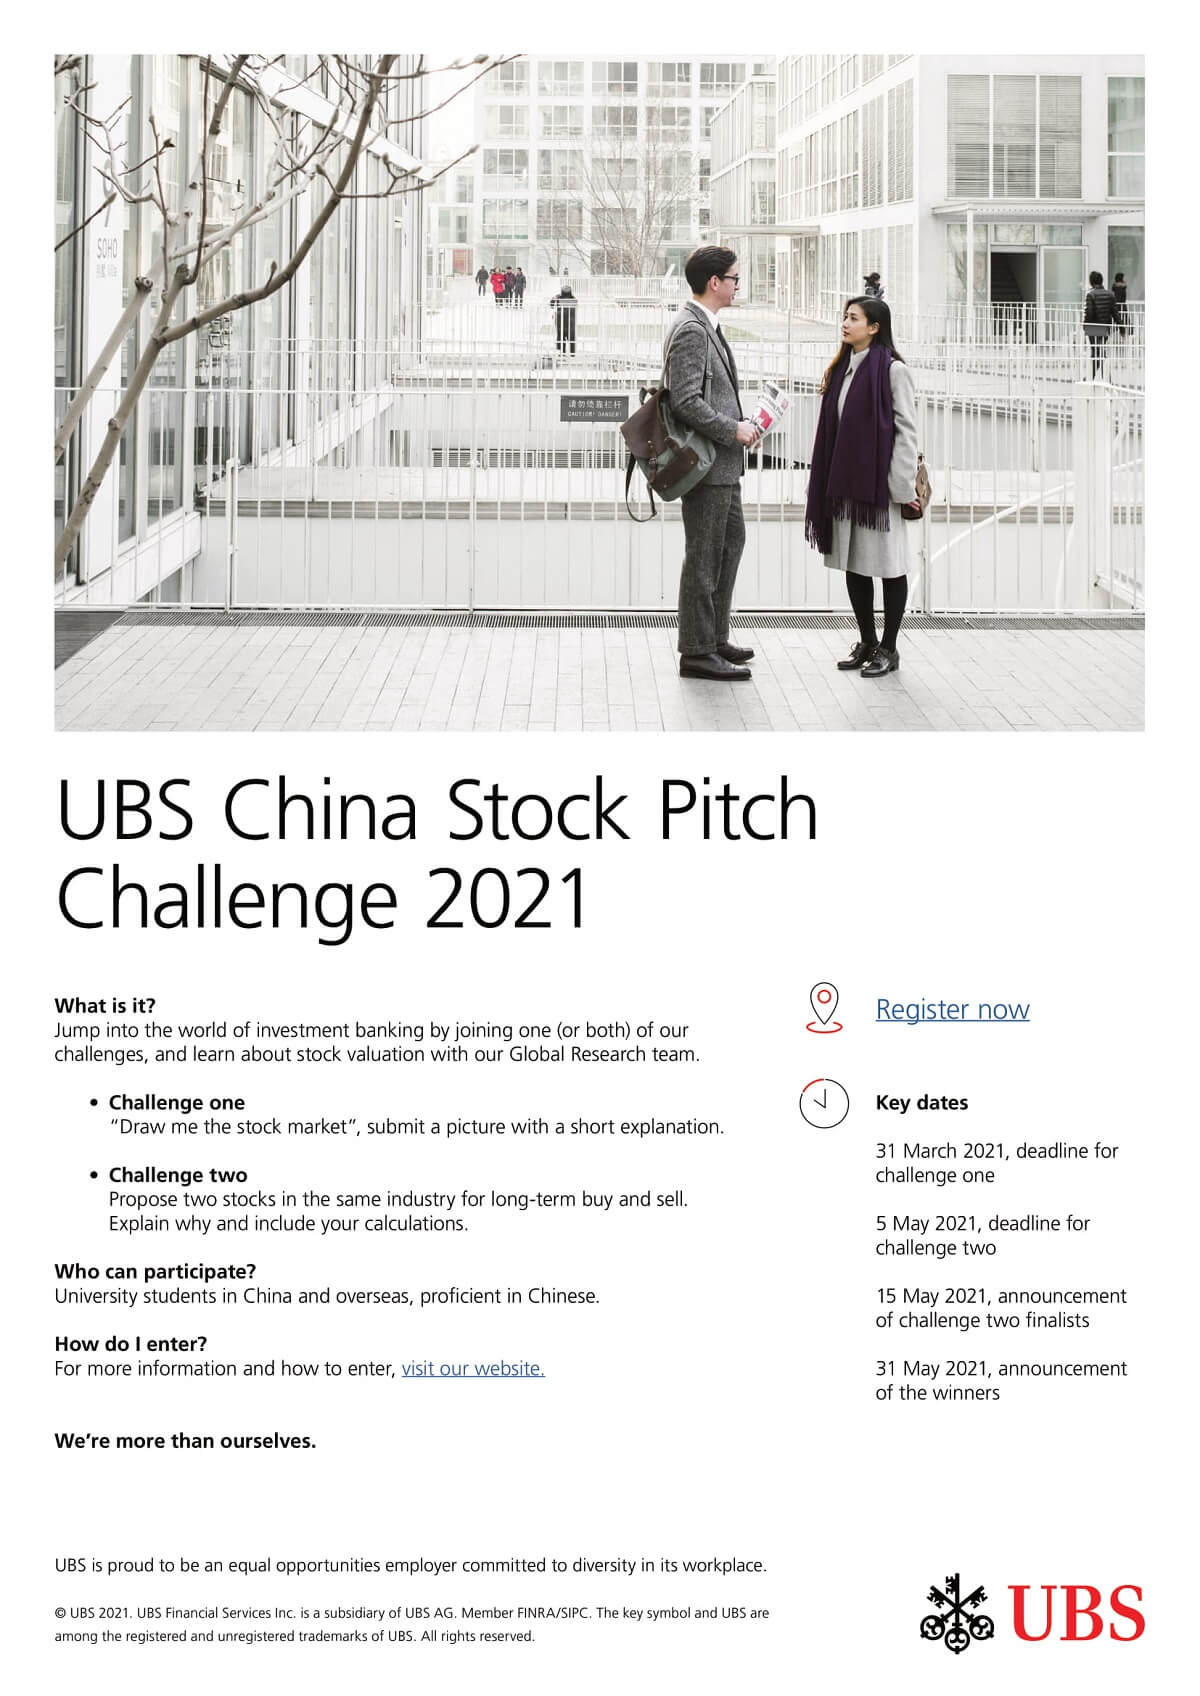 UBS China Stock Pitch Challenge 2021 EDM image